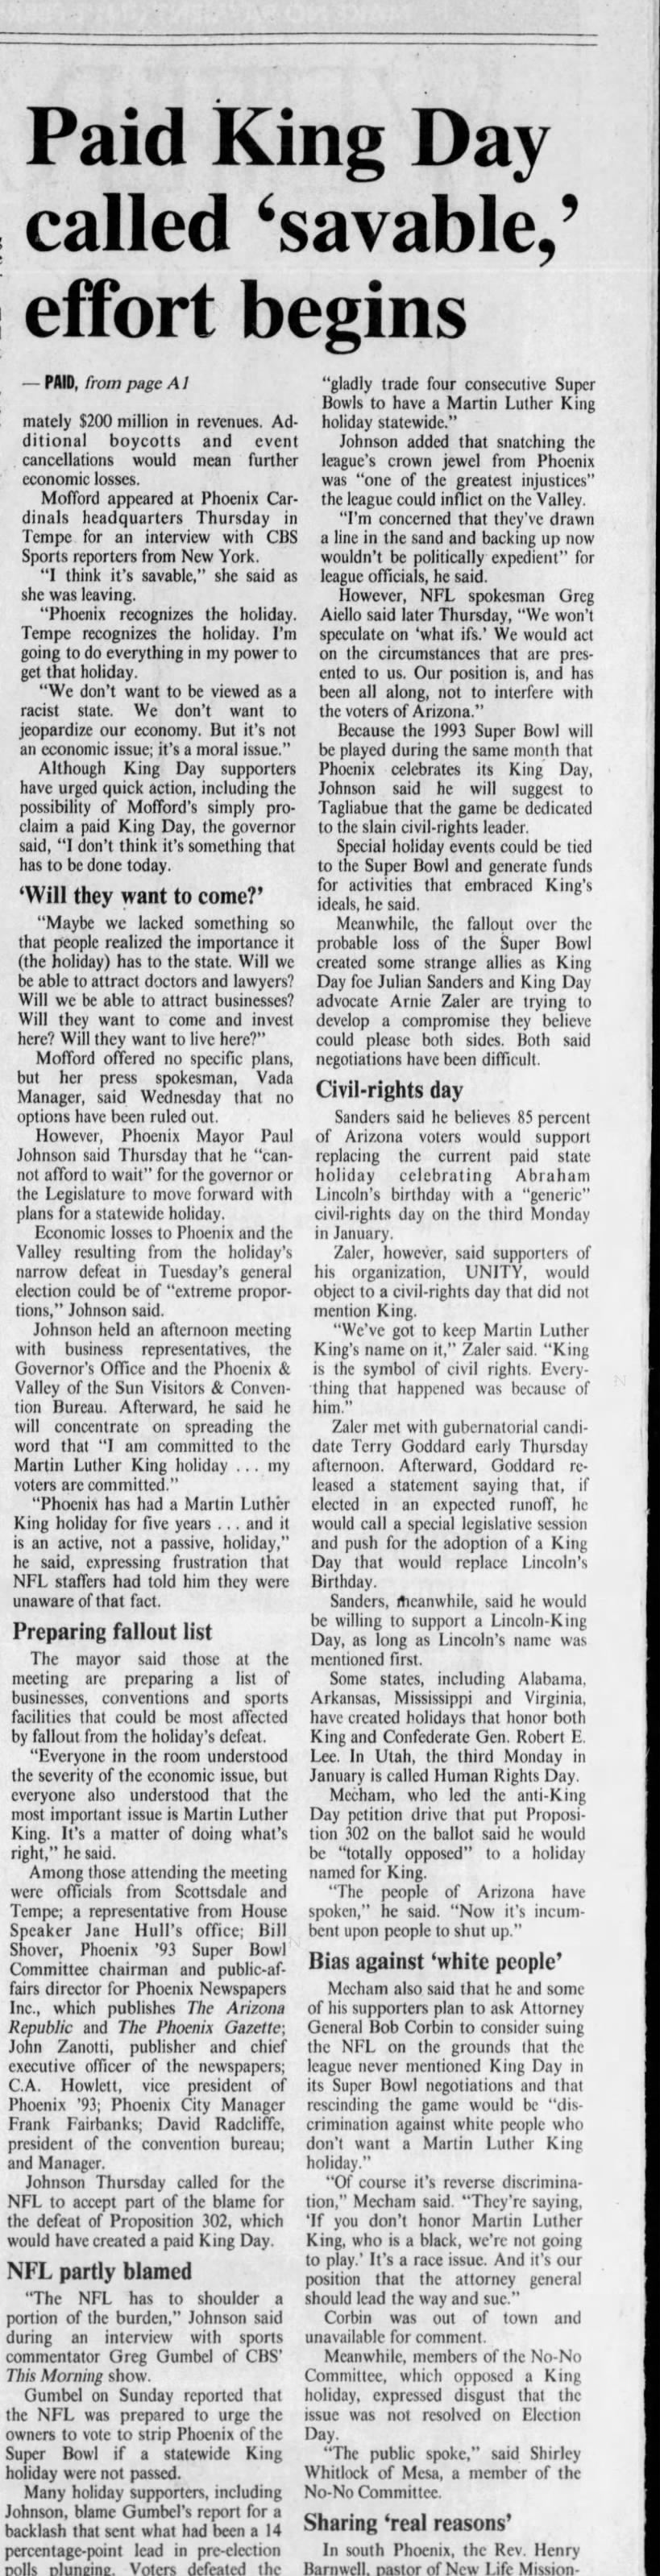 "Paid King Day called 'savable' effort begins (Nov 09, 1990)